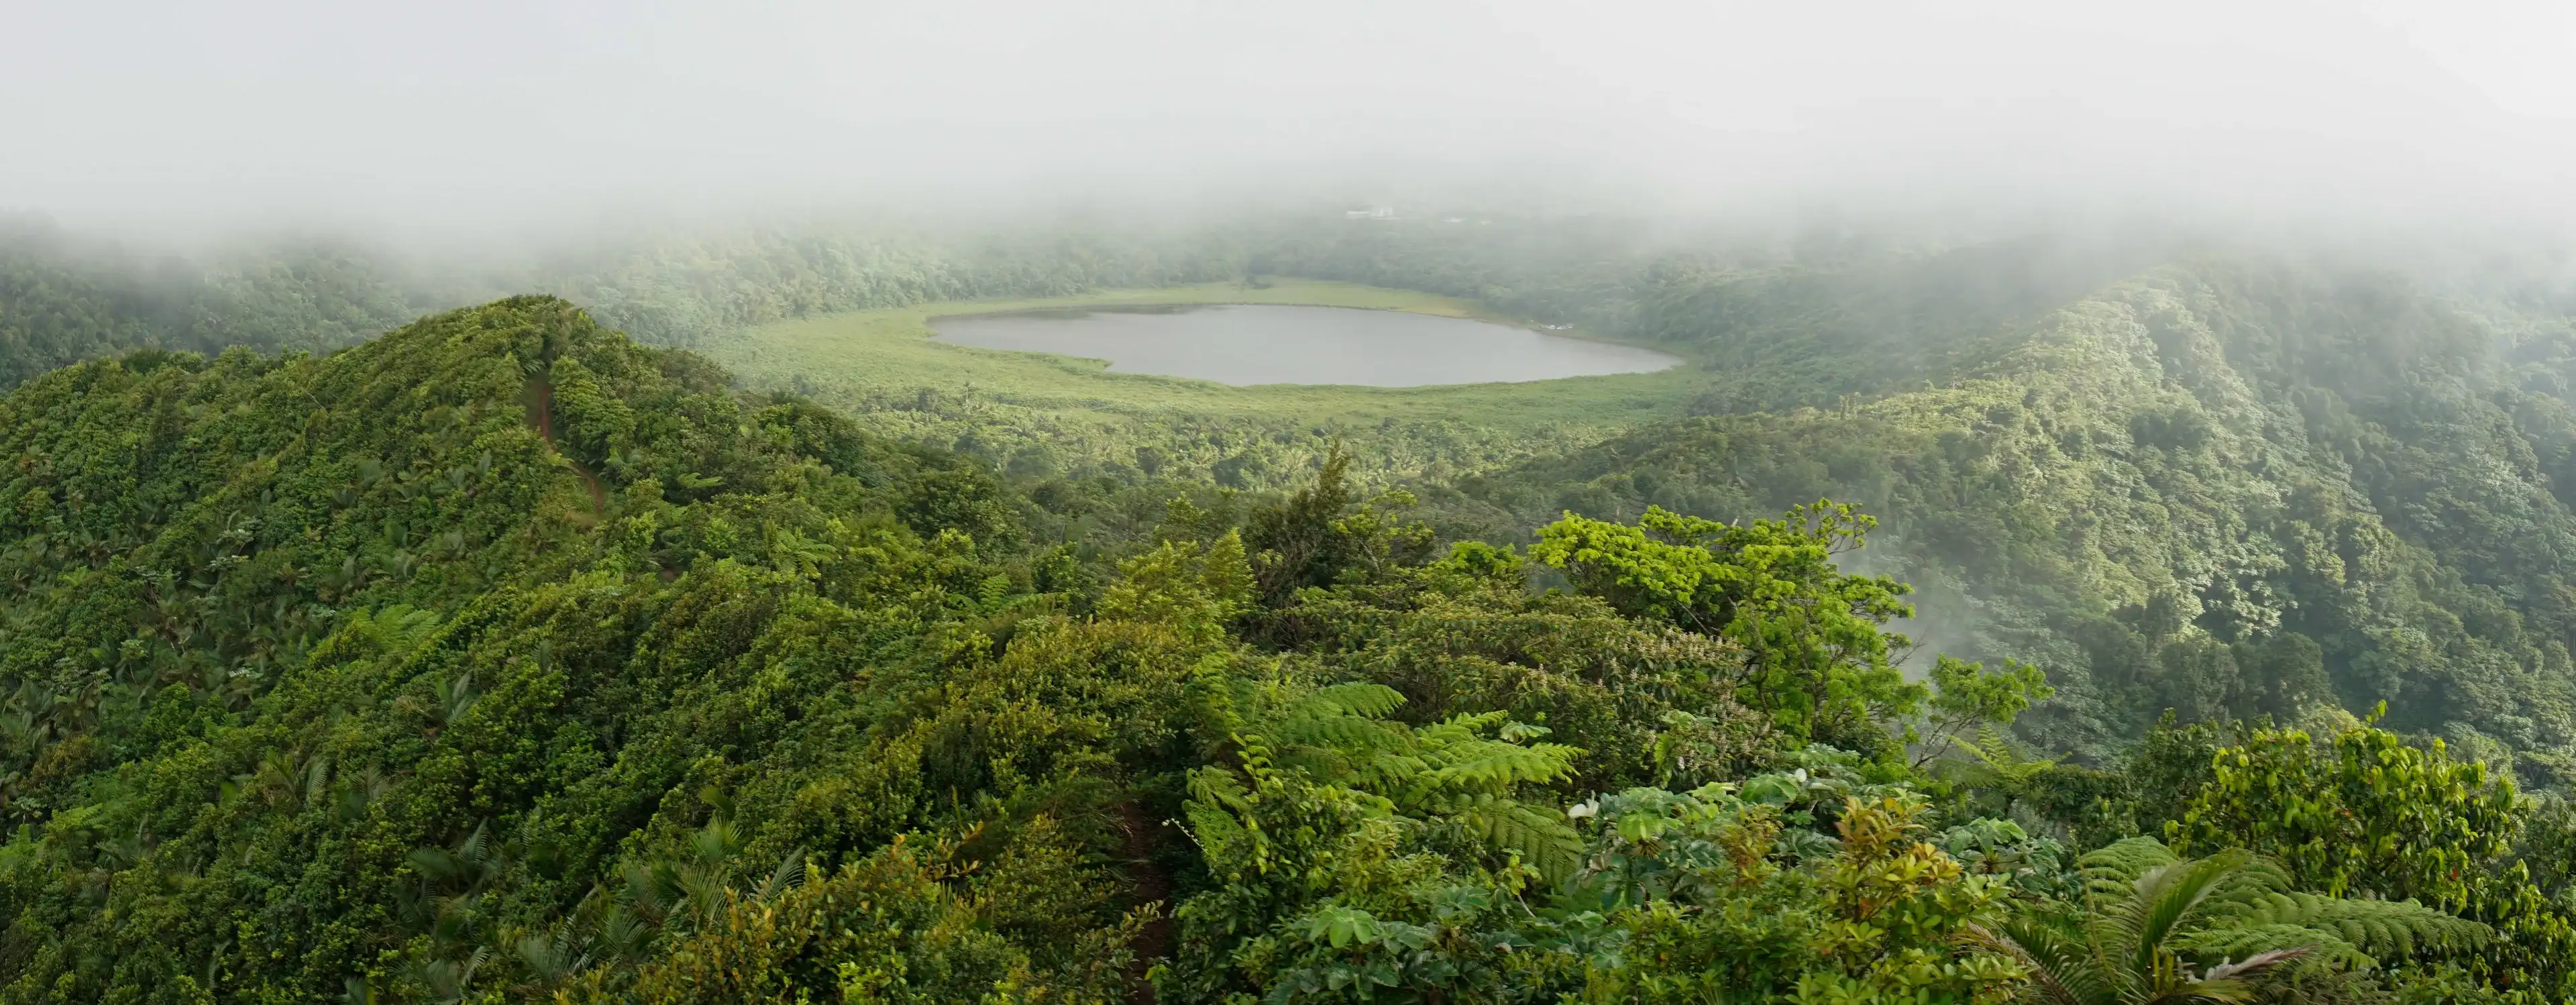 Green Jungle and lake at Mount Qua Qua near Caribbean St. George's, Grenada.